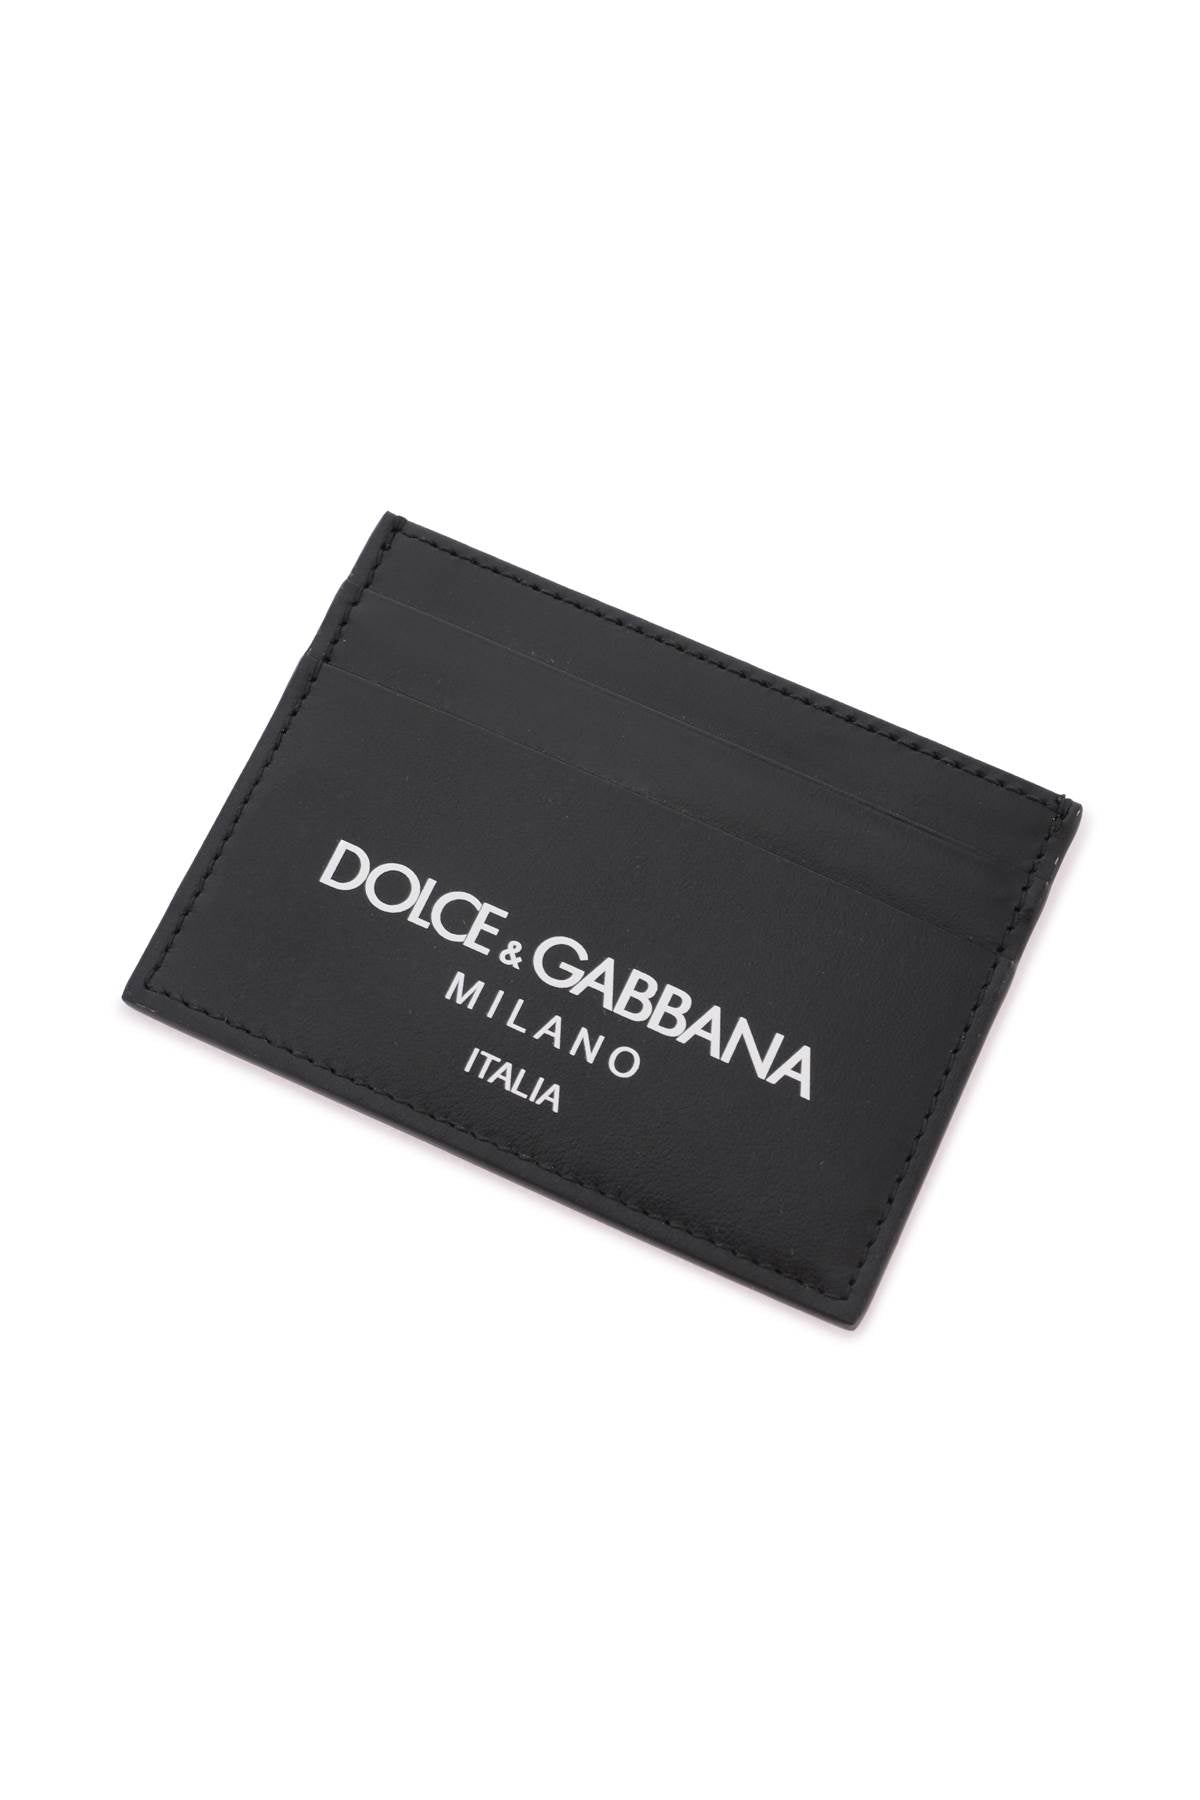 Dolce & gabbana logo leather cardholder-1